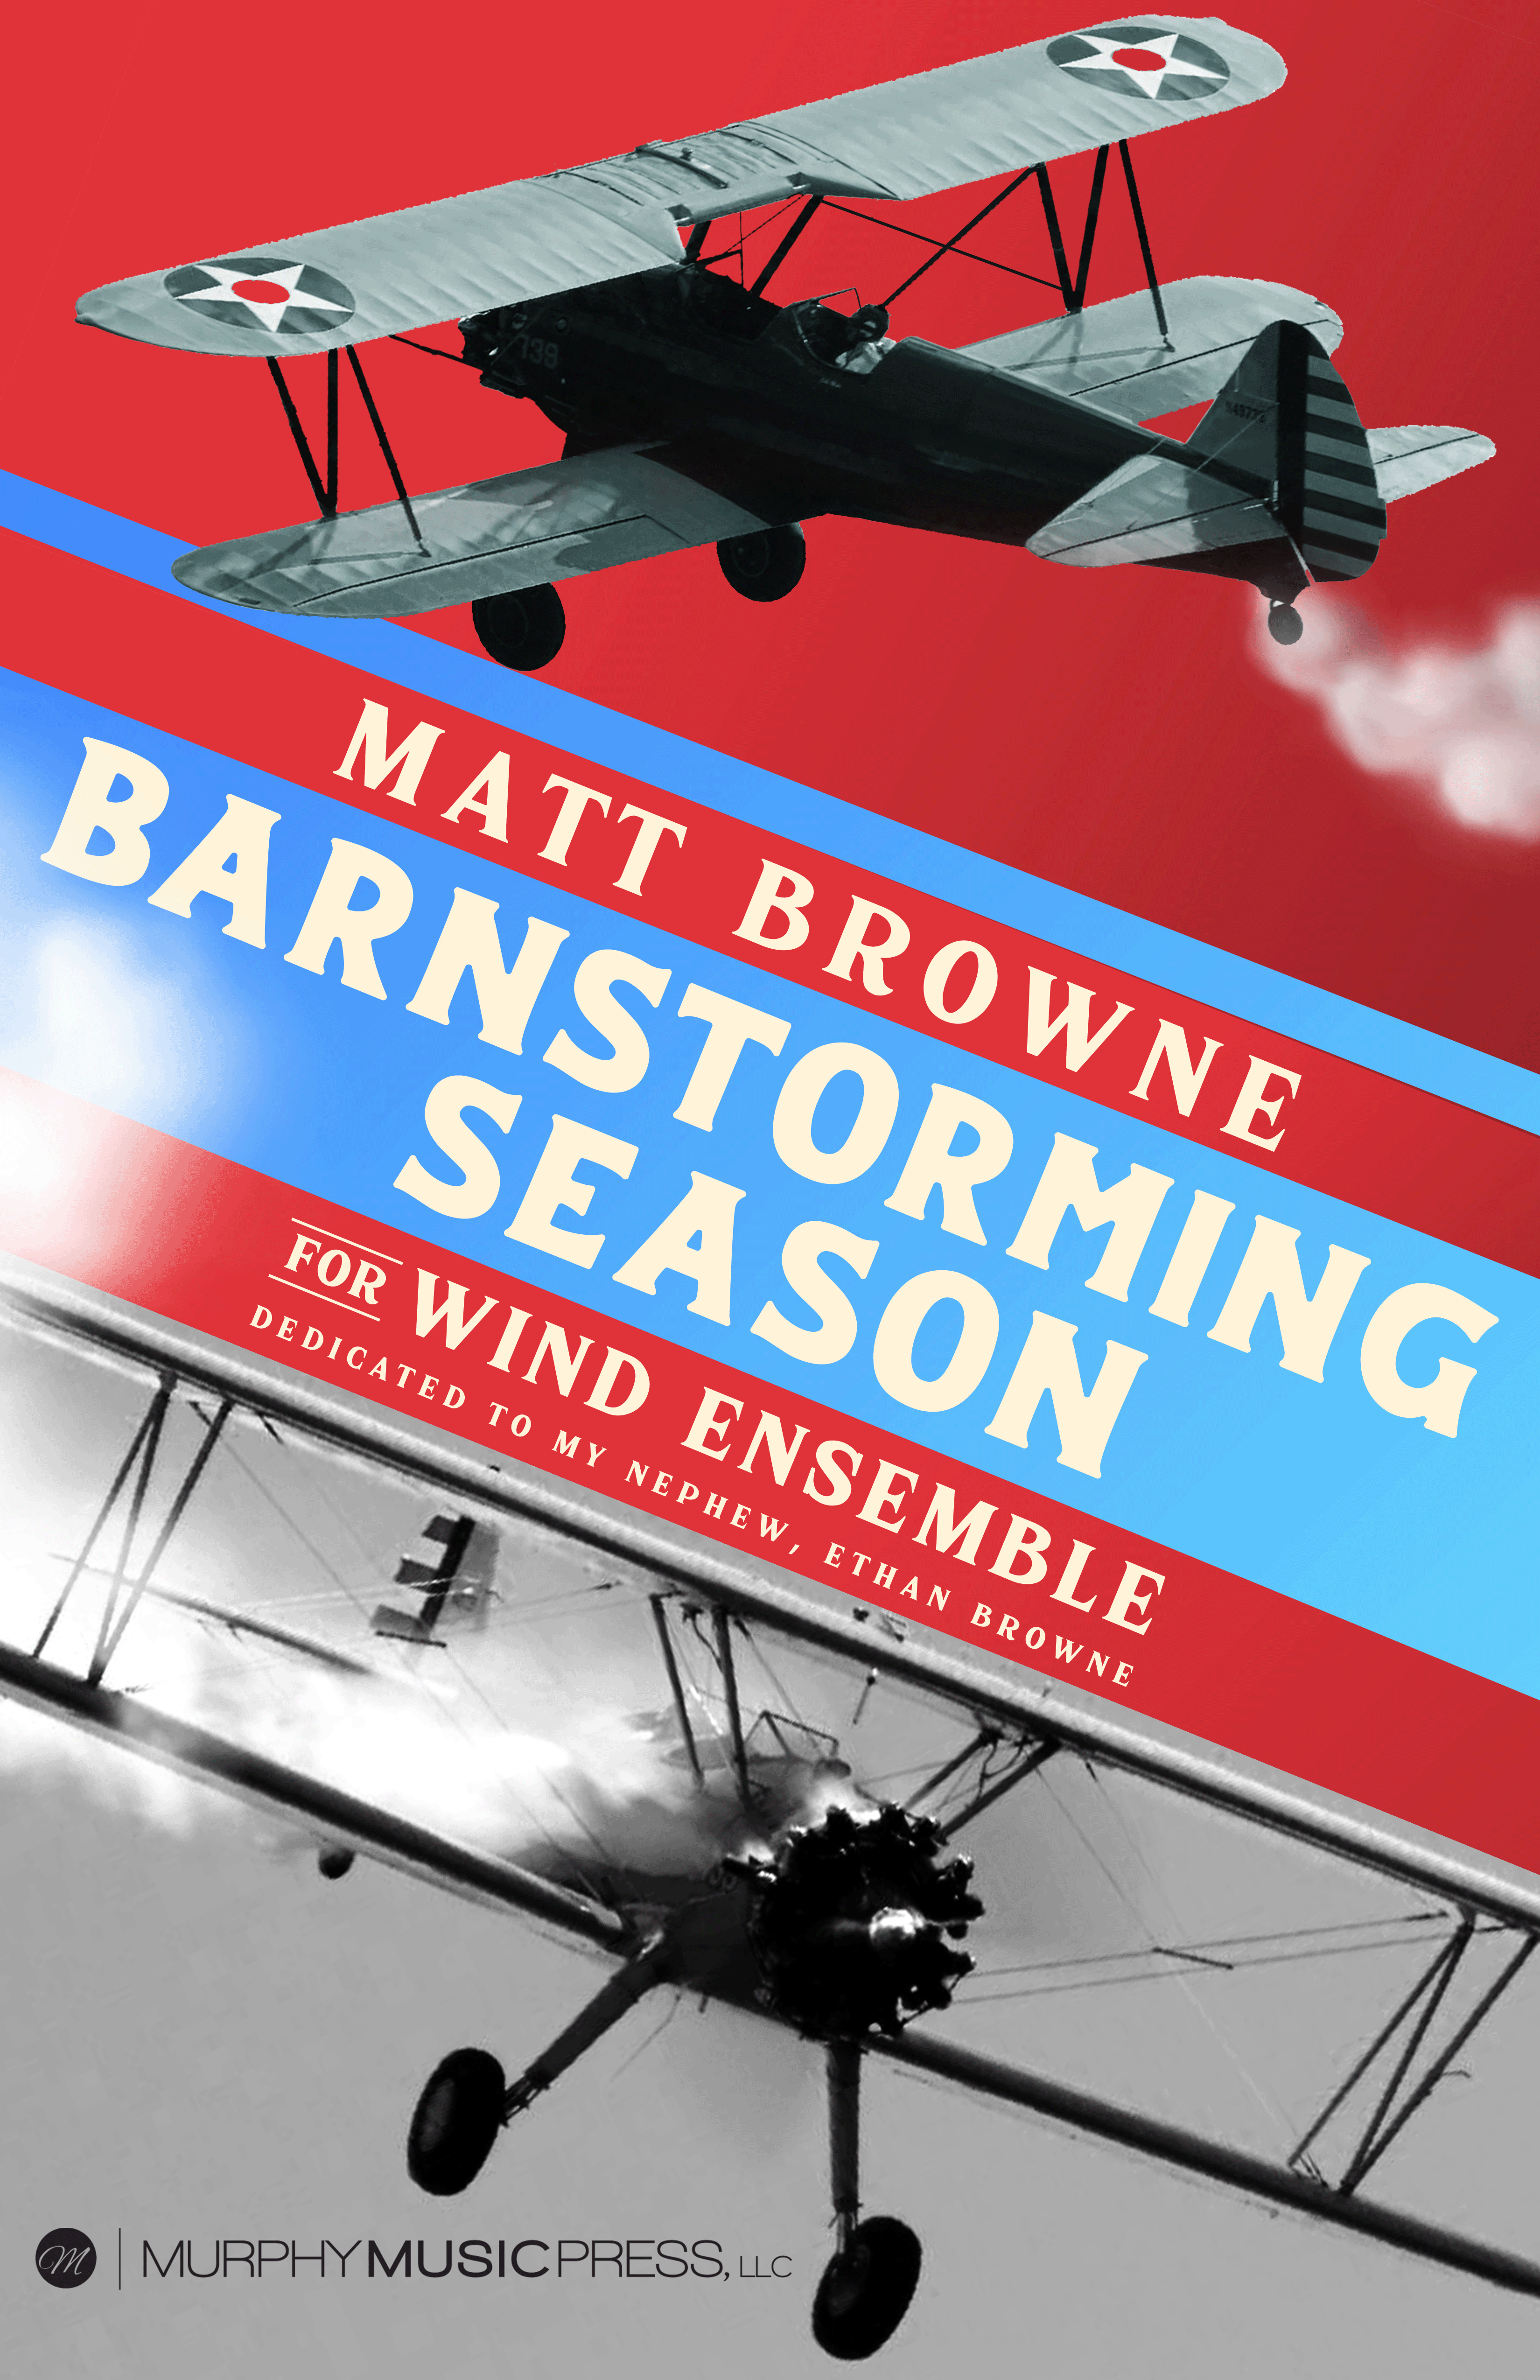 Barnstorming Season by Matthew Browne